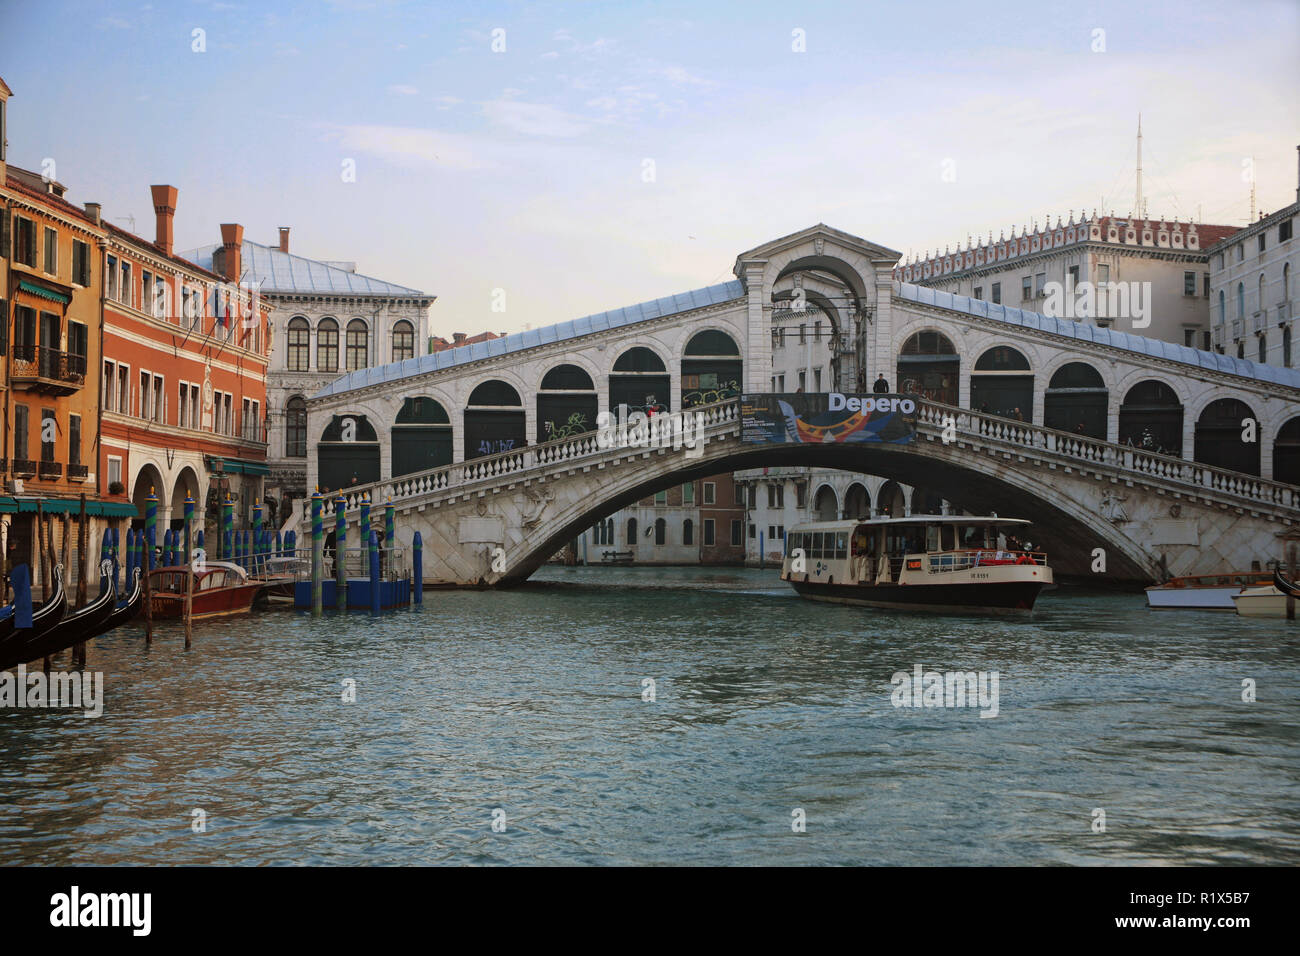 Ponte di Rialto, Grand Canal, Venice, Italien: ein Vaporetto ergibt sich aus unter der Brücke Stockfoto